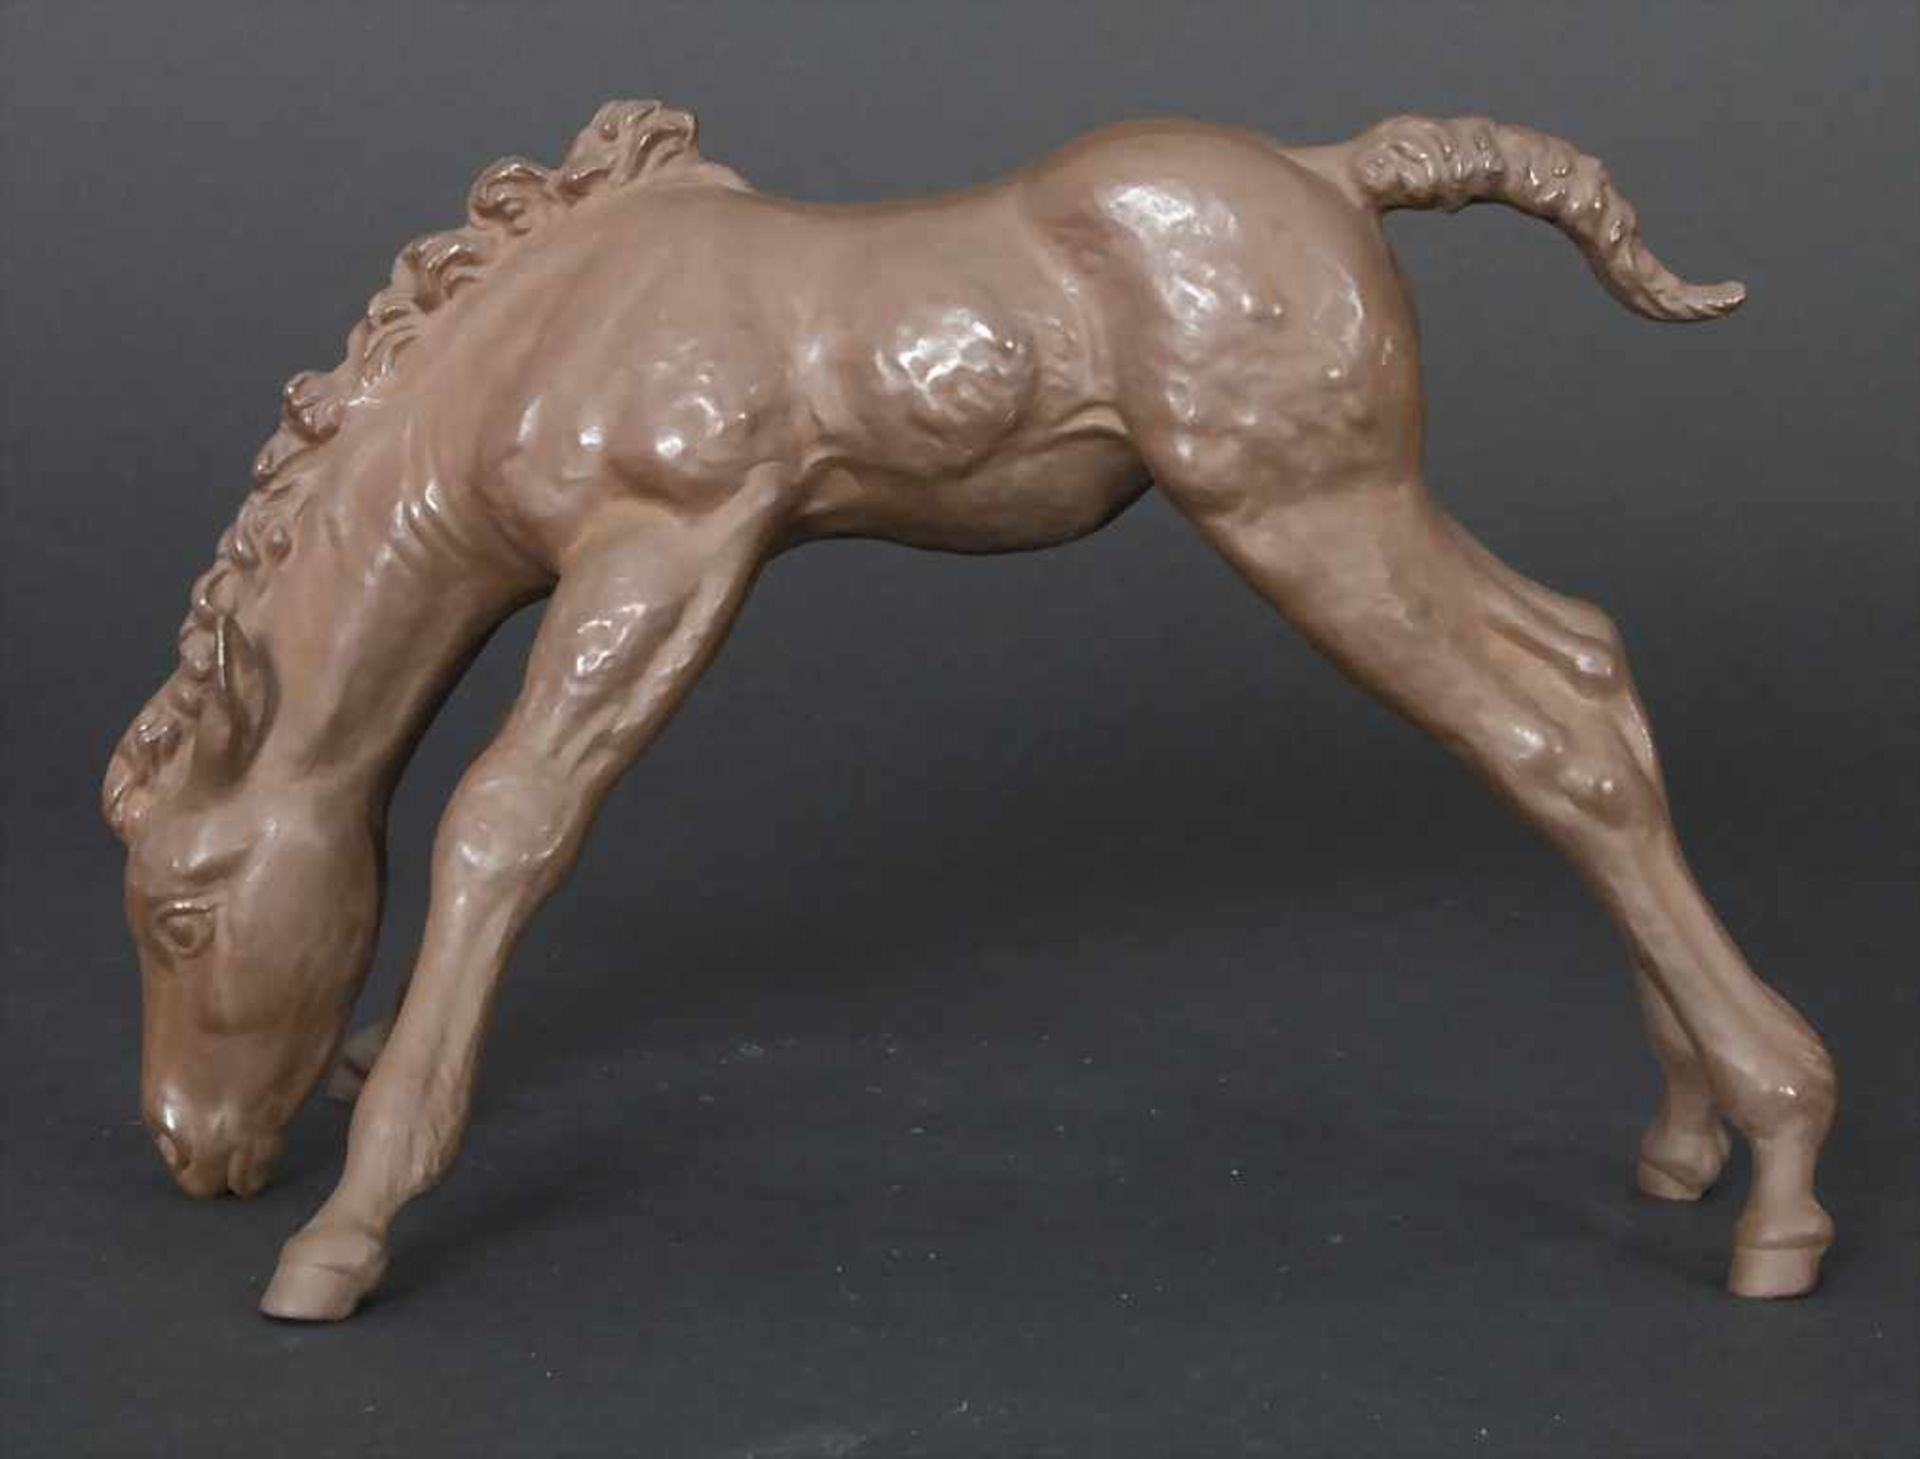 Tierfigur 'Grasendes Fohlen' / An animal figure of a grazing foal, Meissen, 20. Jh.Material: